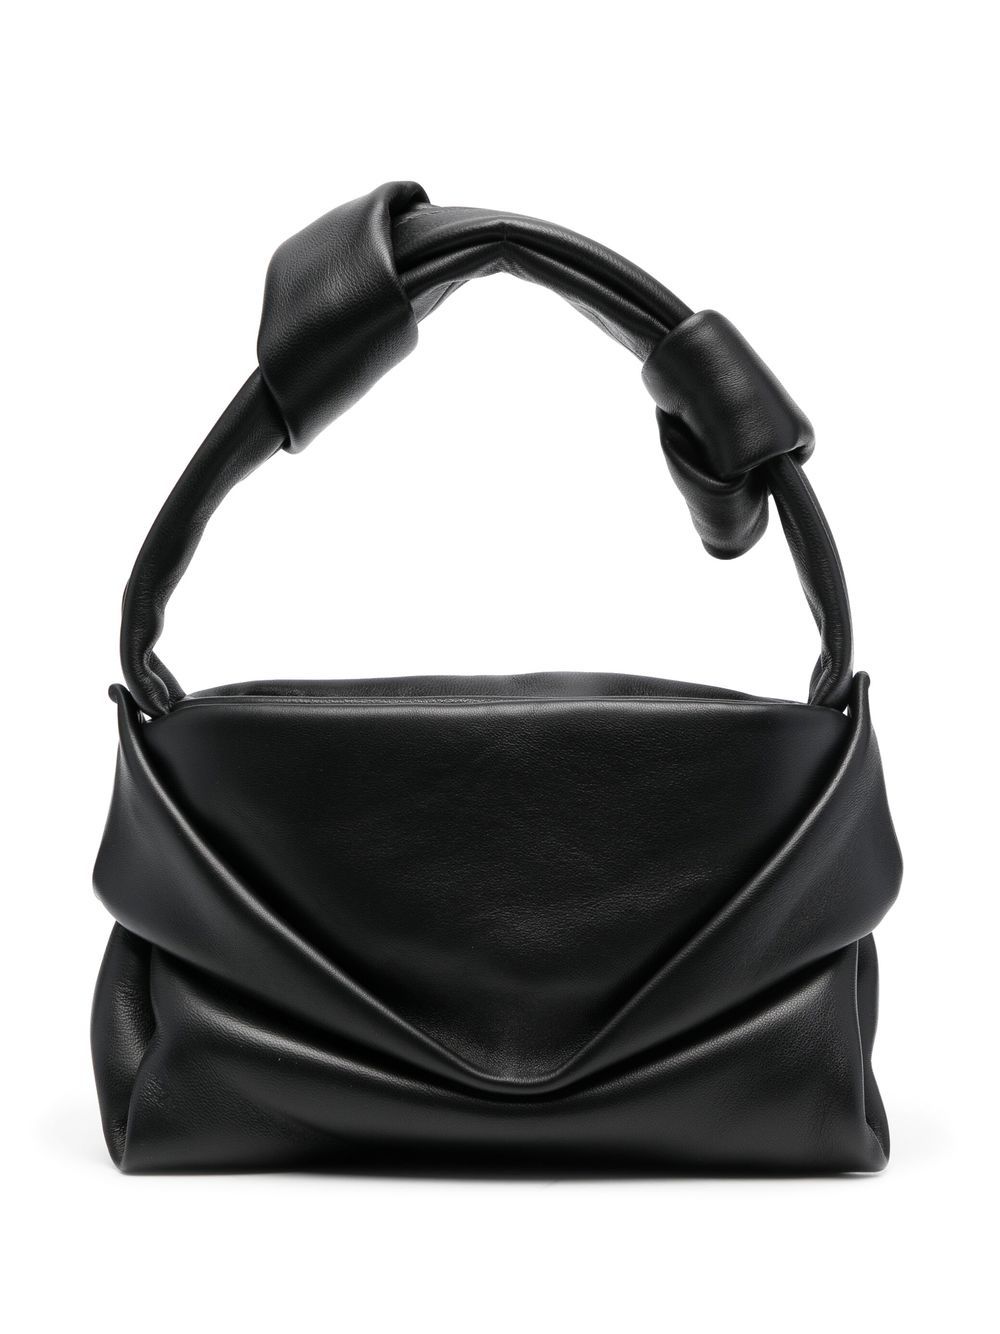 Kiss leather tote bag